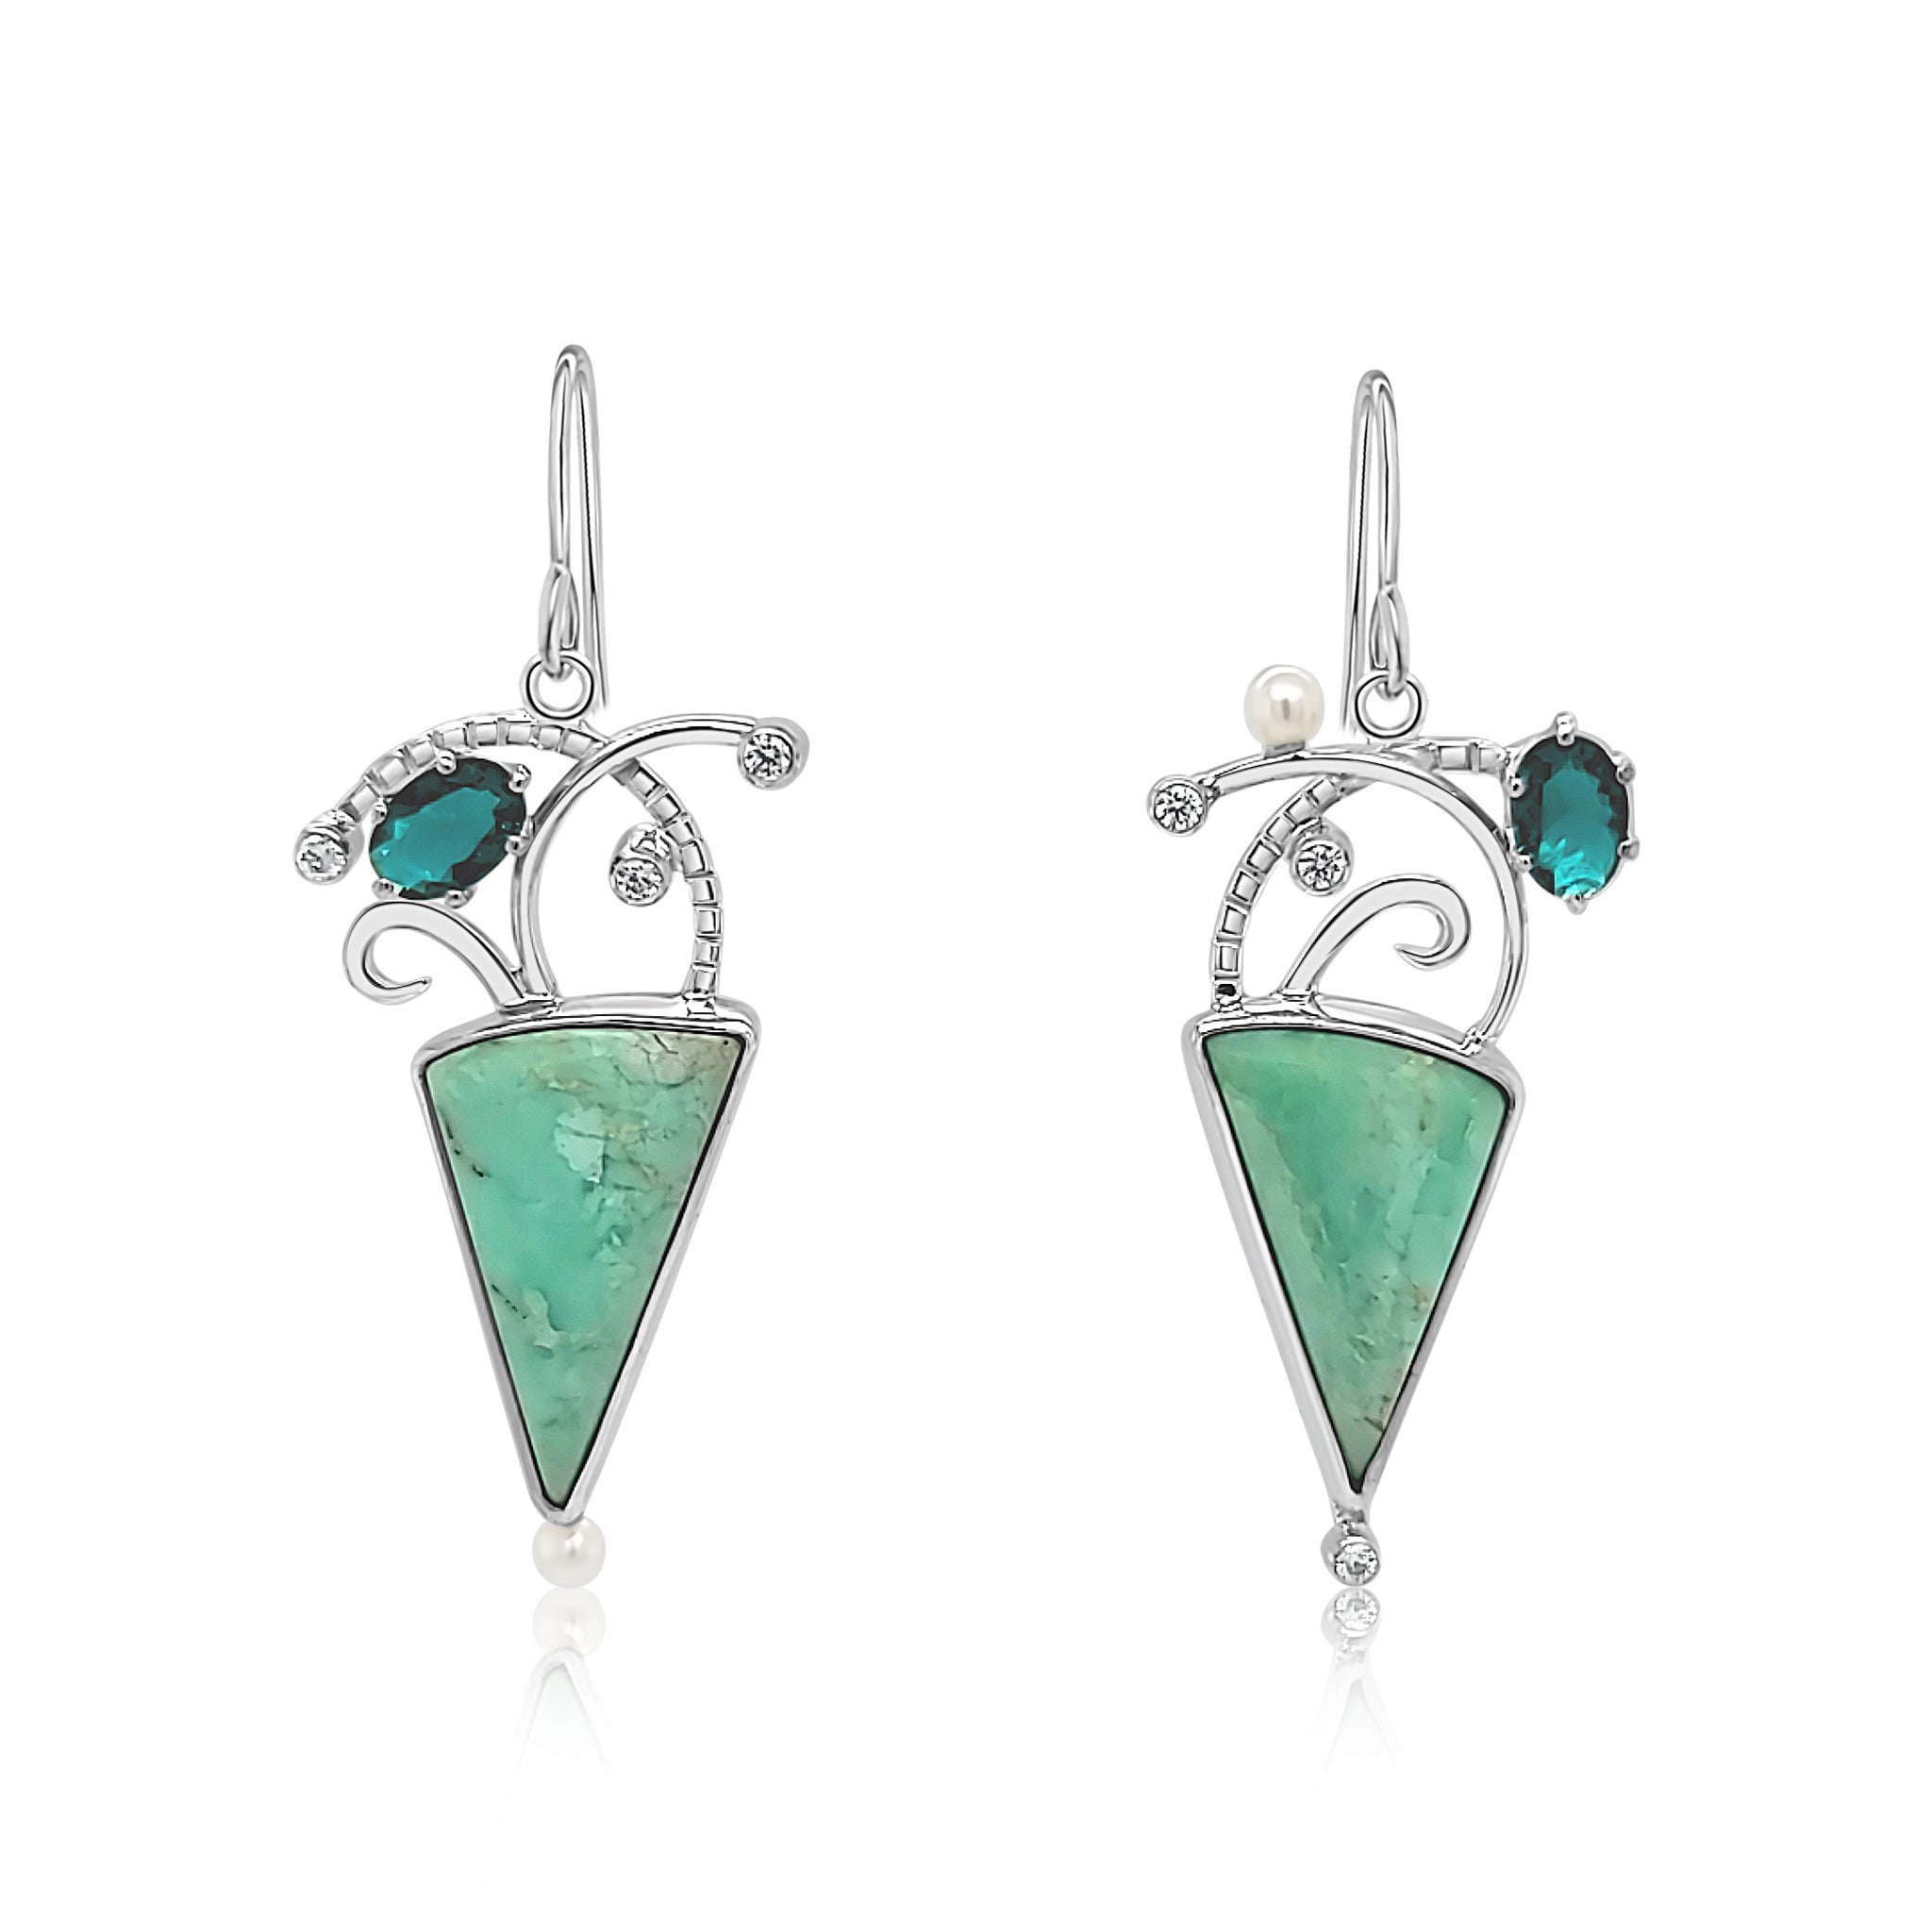 Asymmetric Green Opal, Tourmaline, Cubic Zirconia and Freshwater Pearl earrings set in Sterling Silver.